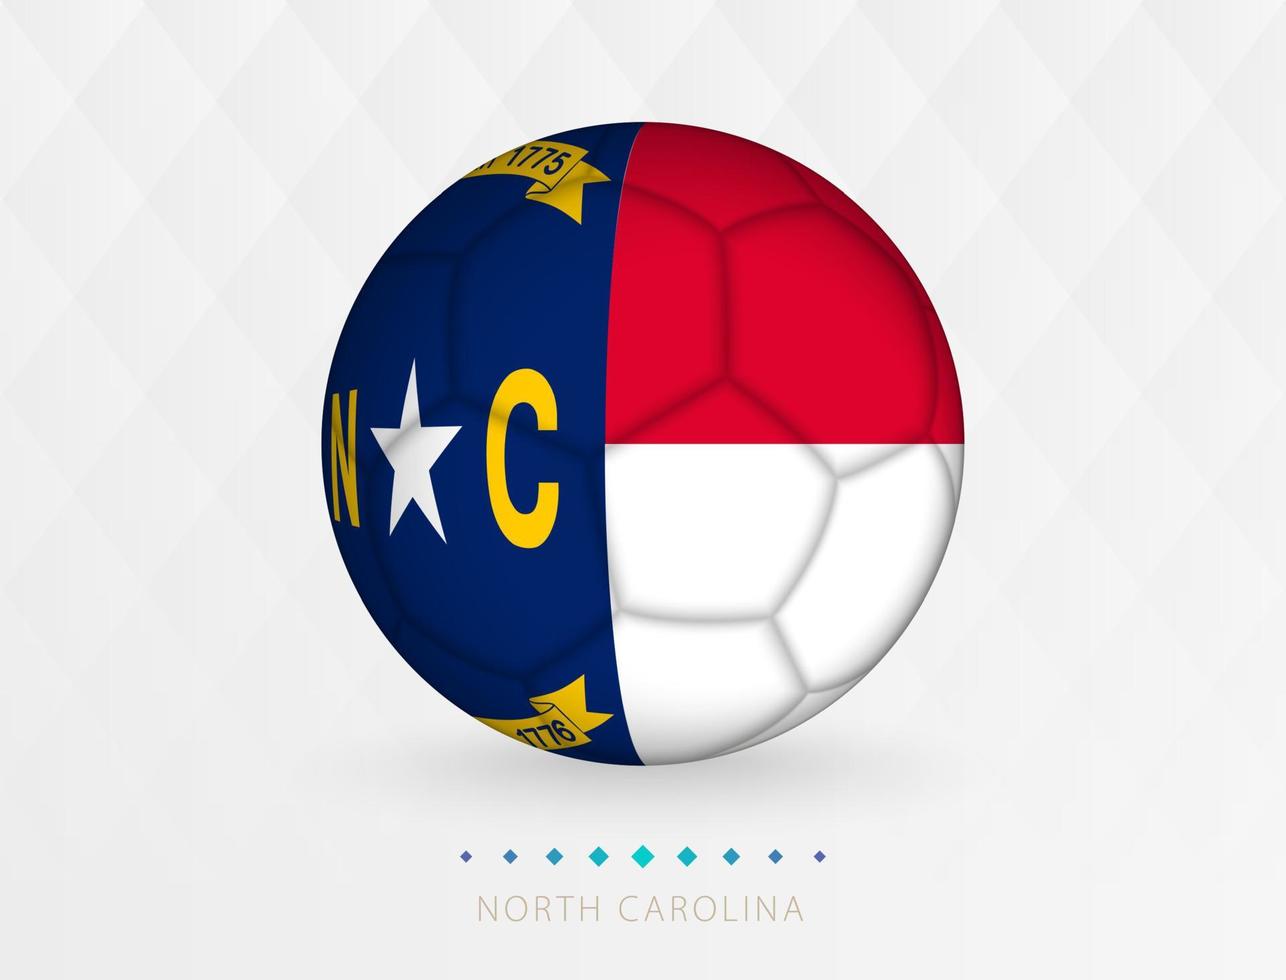 Football ball with North Carolina flag pattern, soccer ball with flag of North Carolina national team. vector